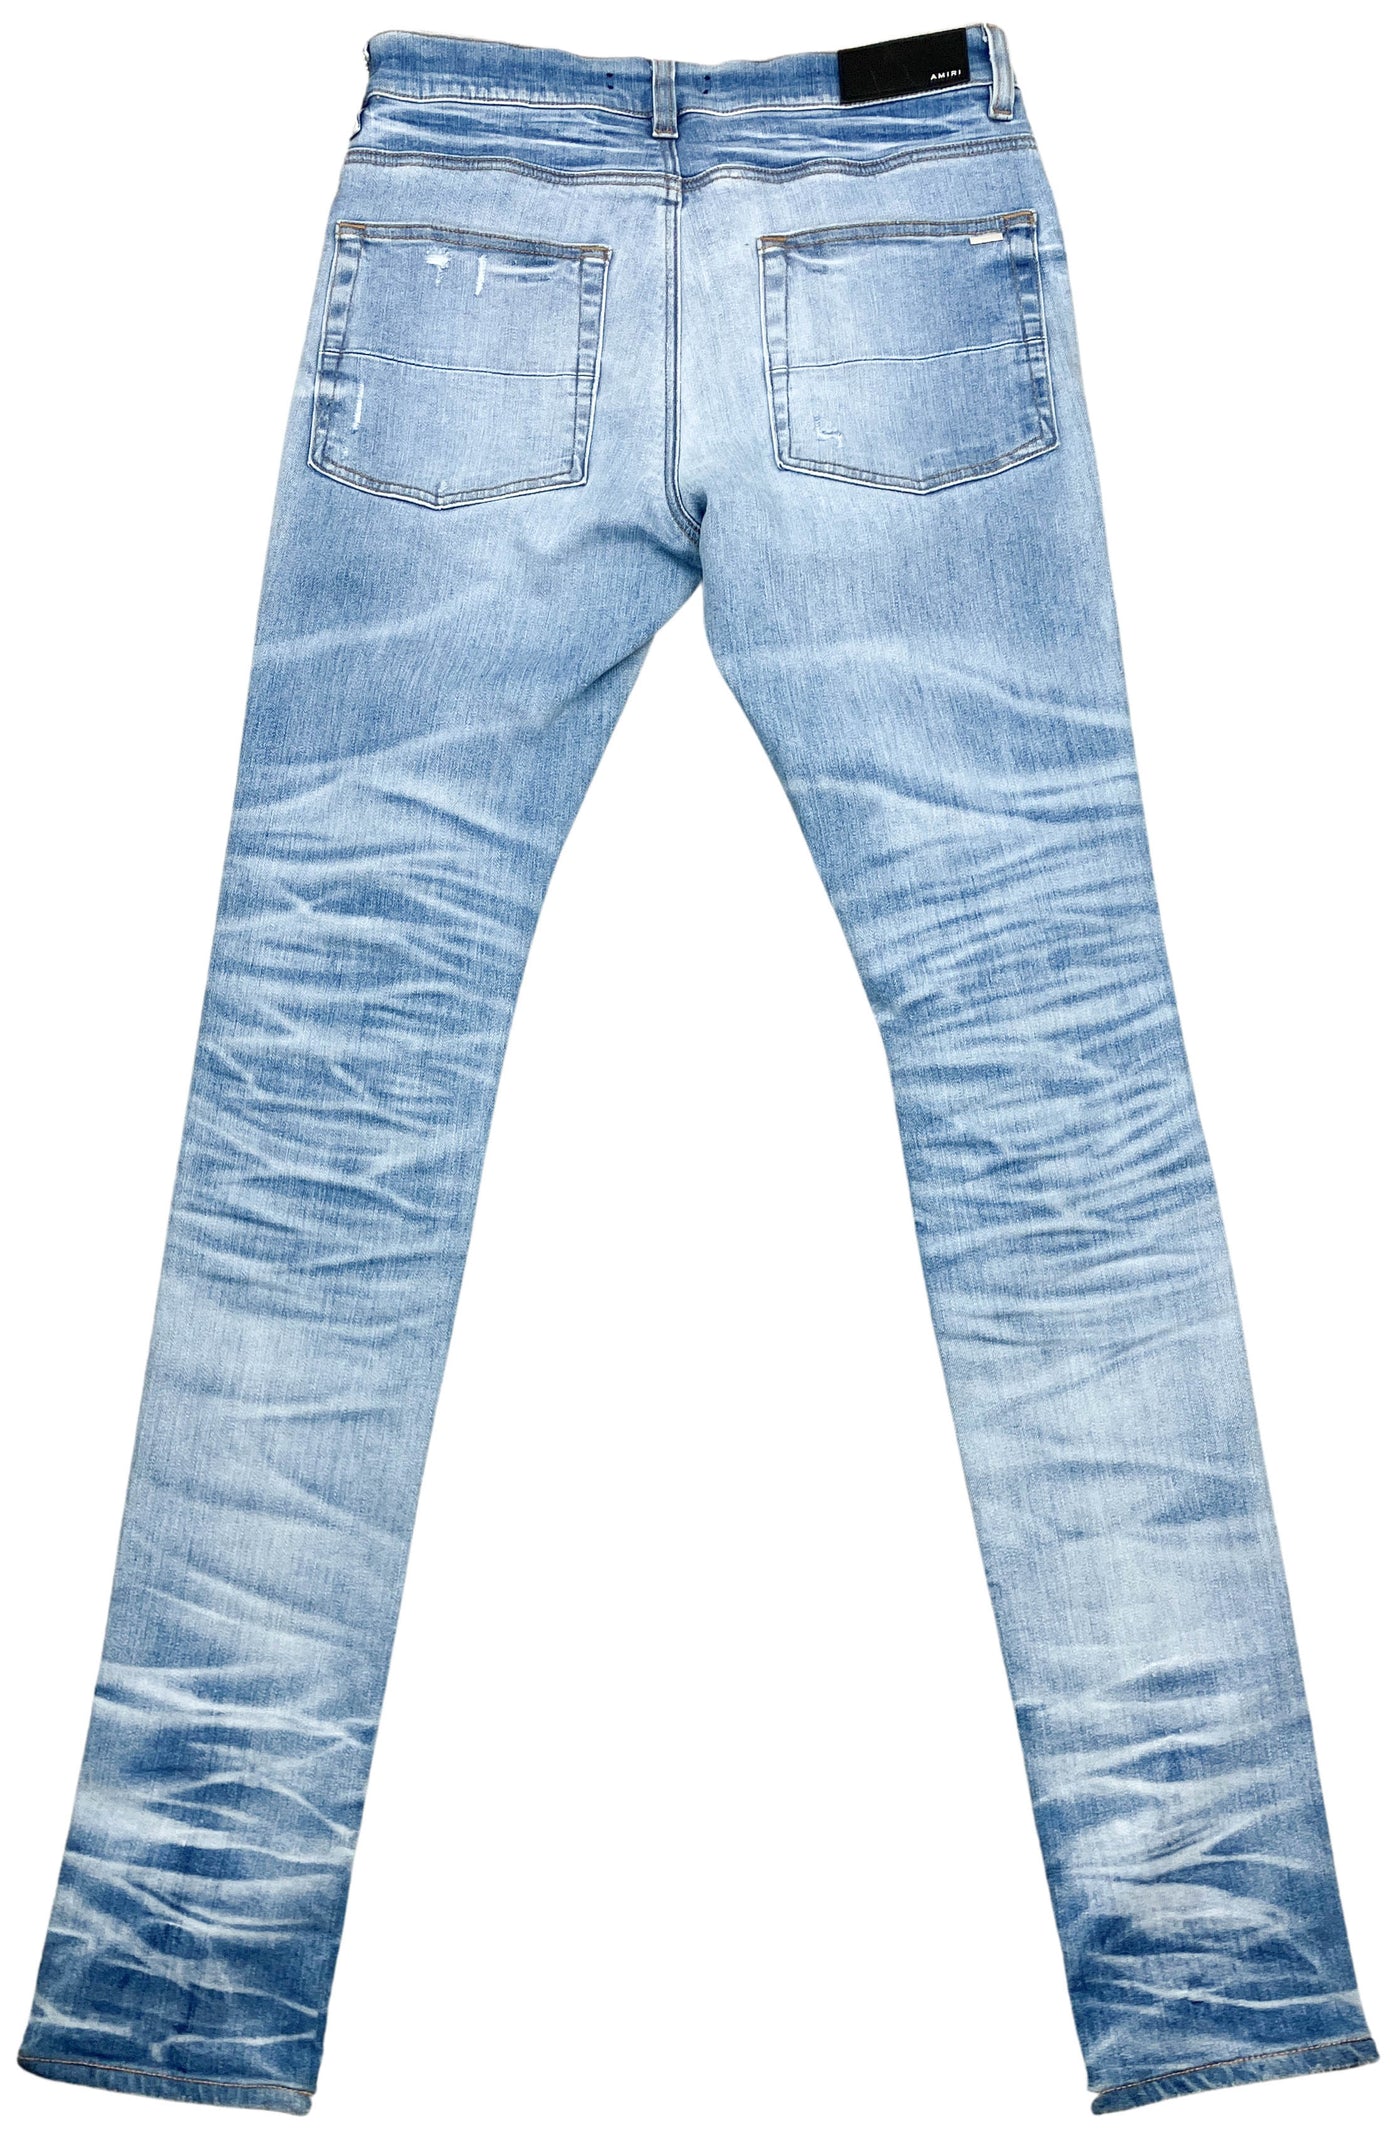 Amiri Crystal Thrasher Jeans in Faded Indigo - Discounts on Amiri at UAL